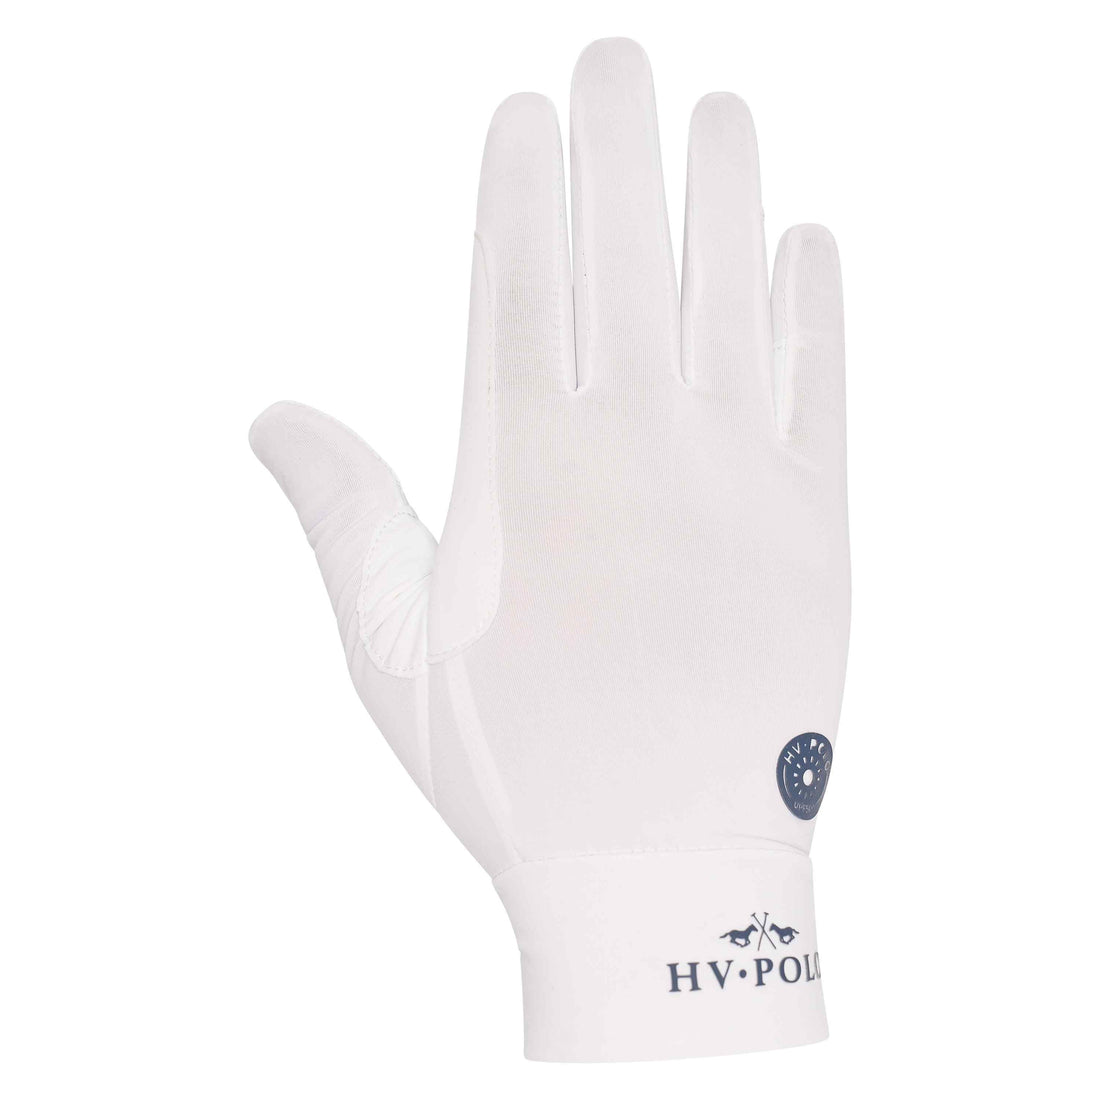 HV Polo - Handsker, UV Gloves, Suzy - White